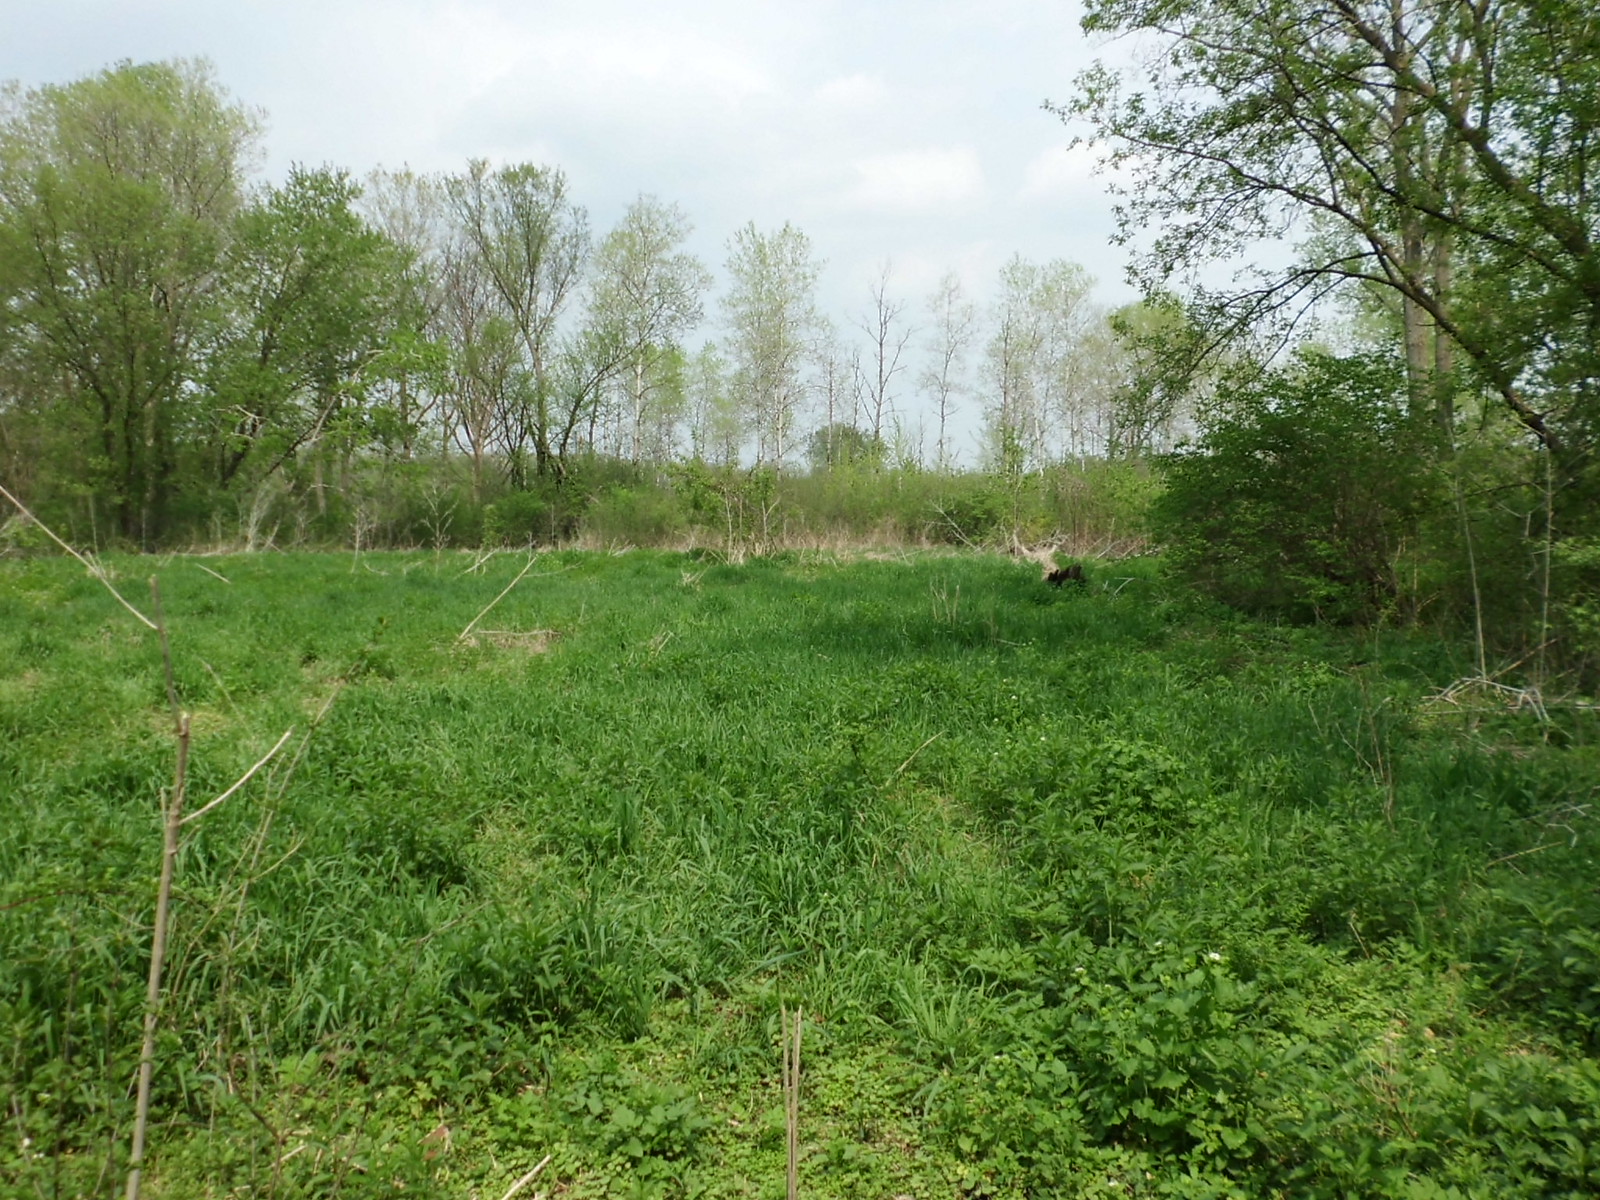 Wetland sedges, facing east